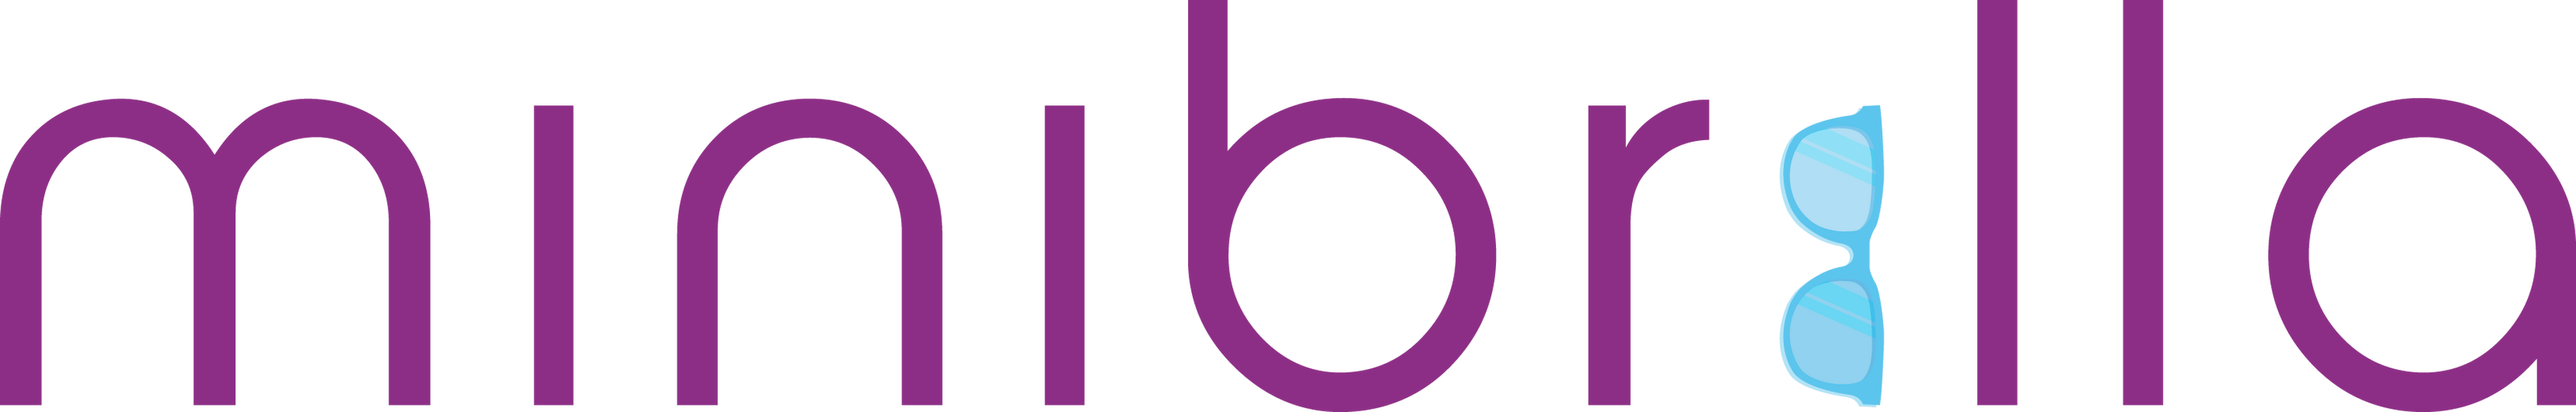 MiniBrilla logotype